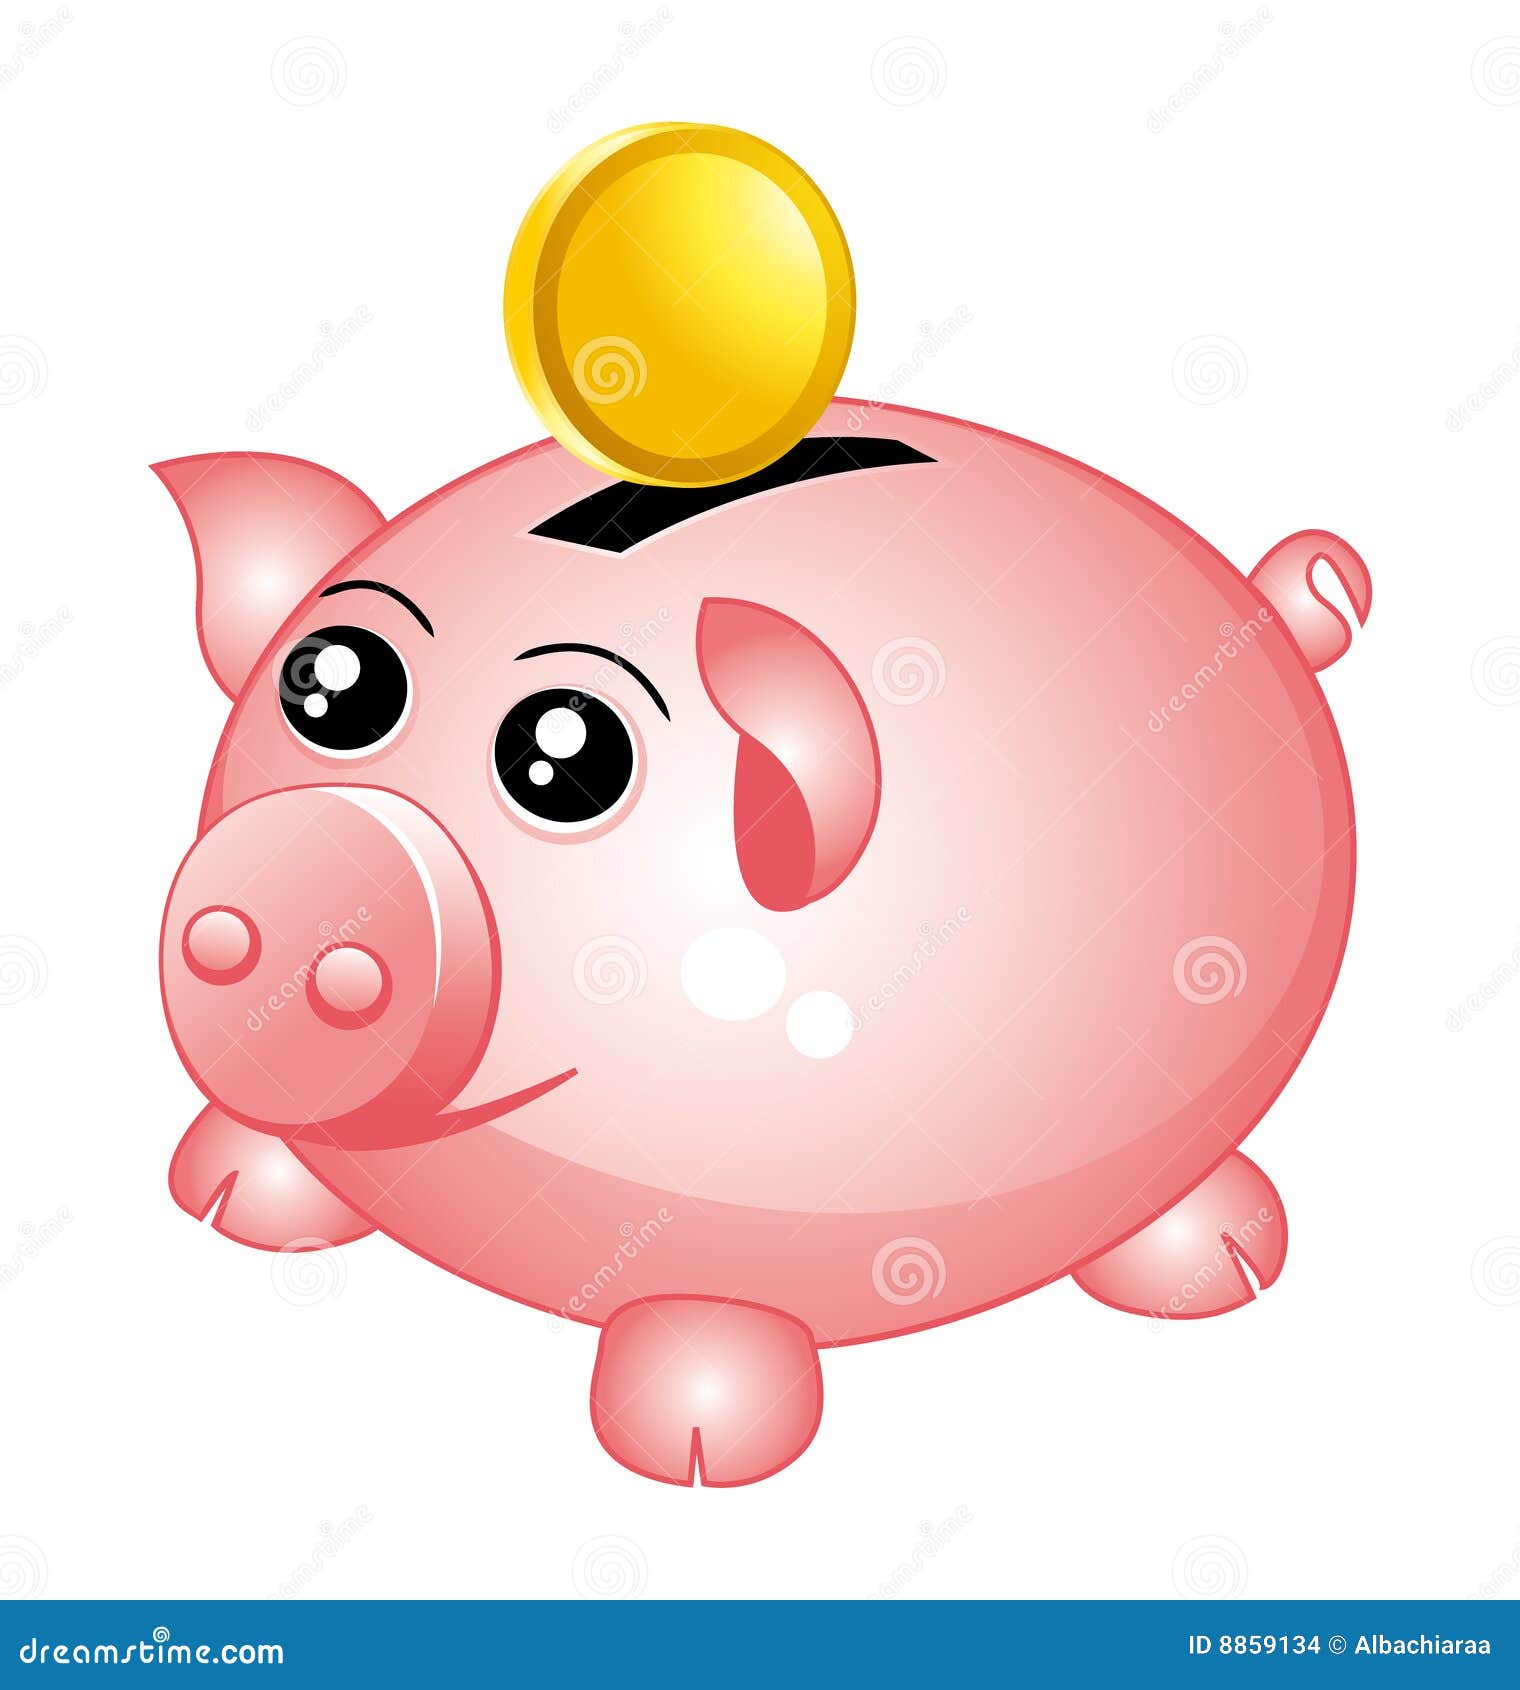 clipart piggy bank - photo #39